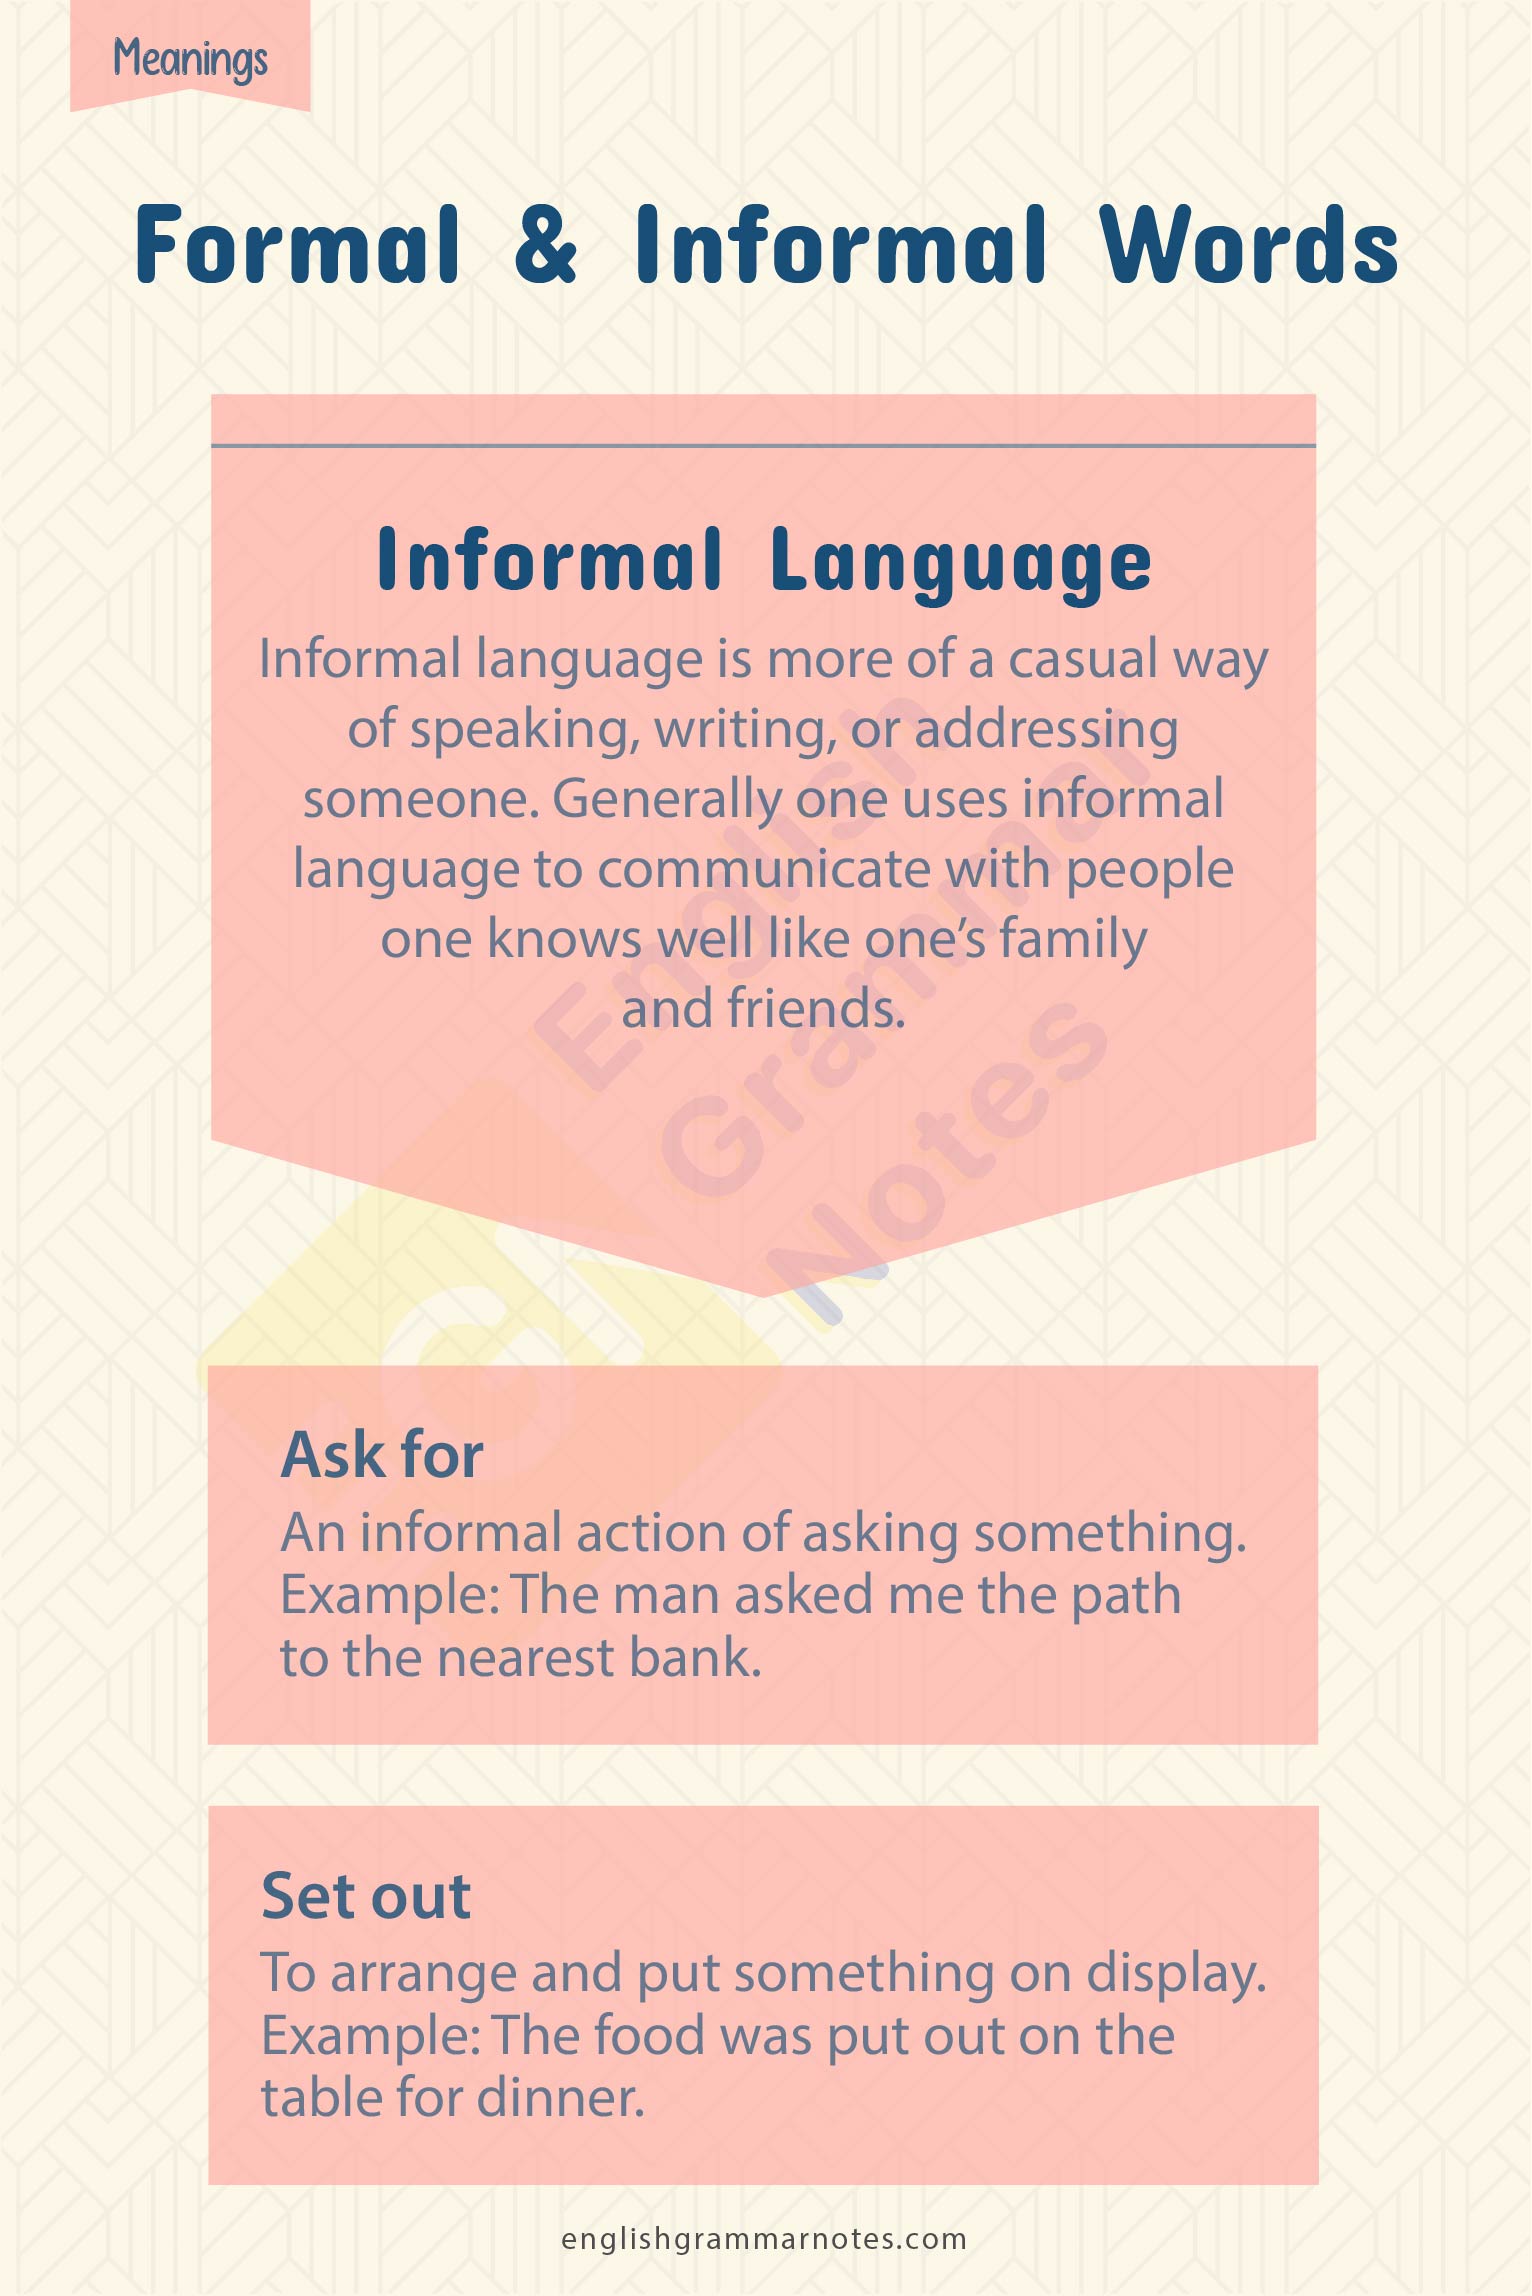 Formal & Informal words 2